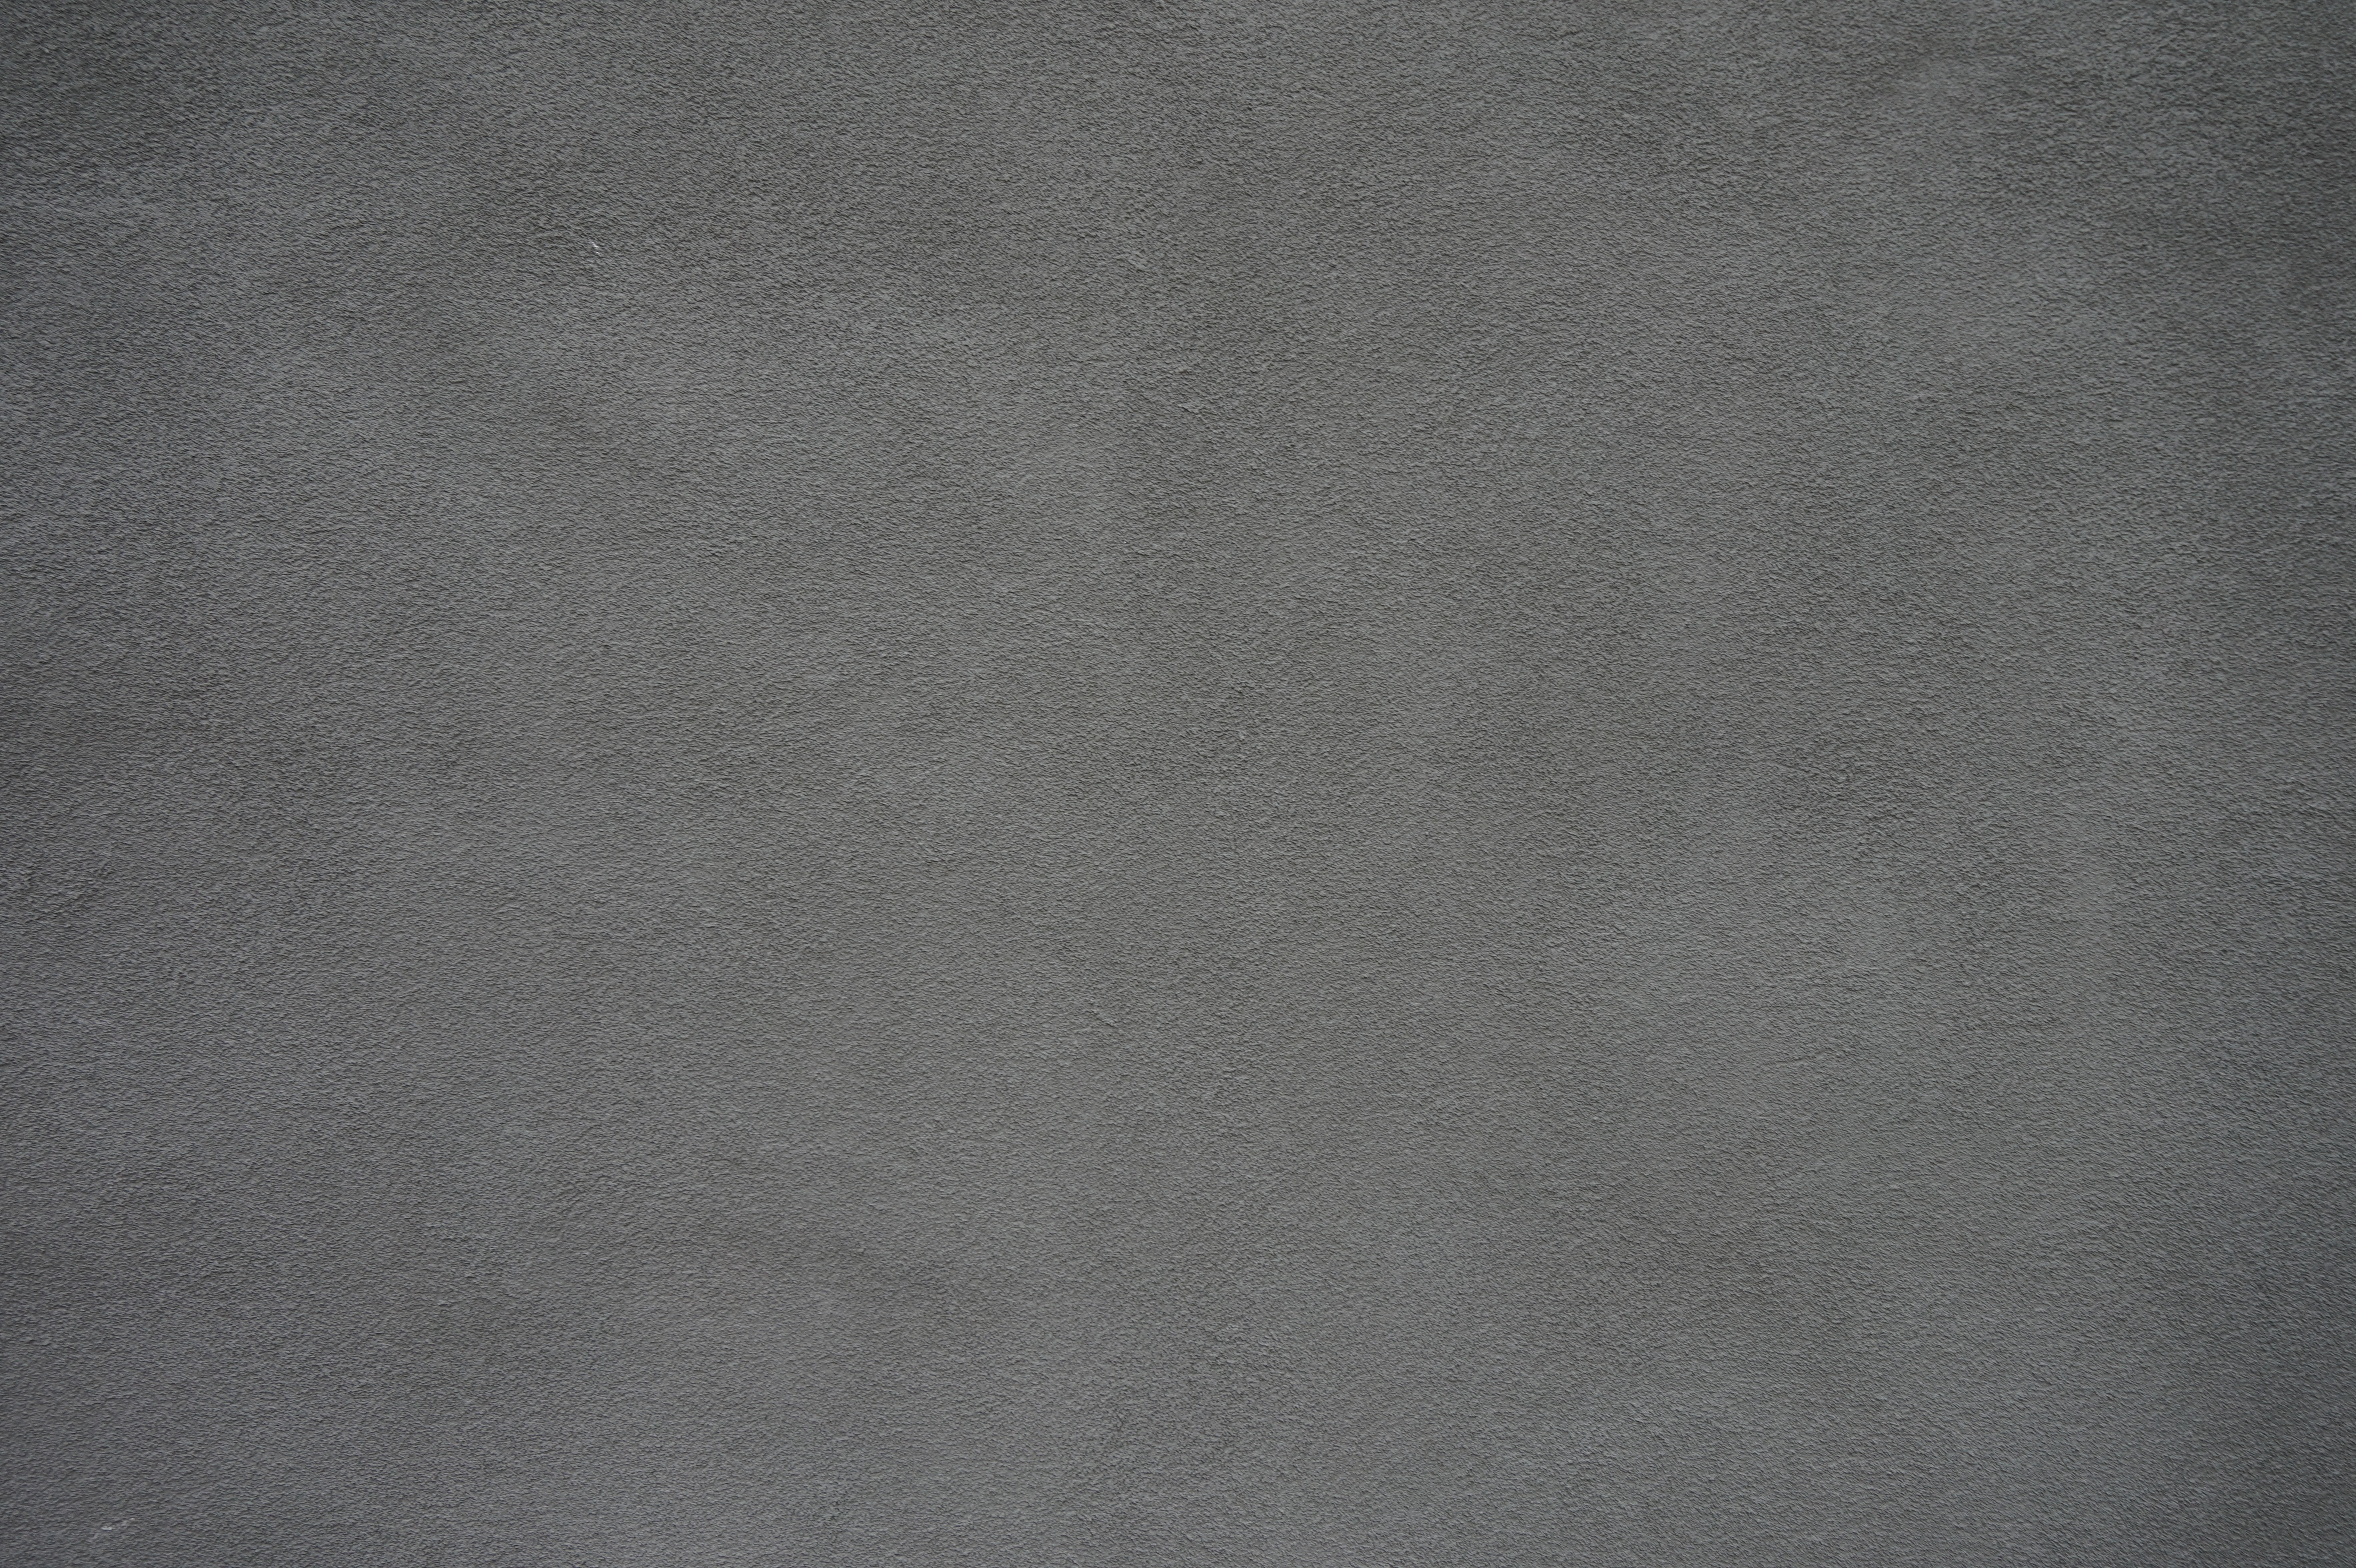 Gray Wall Texture